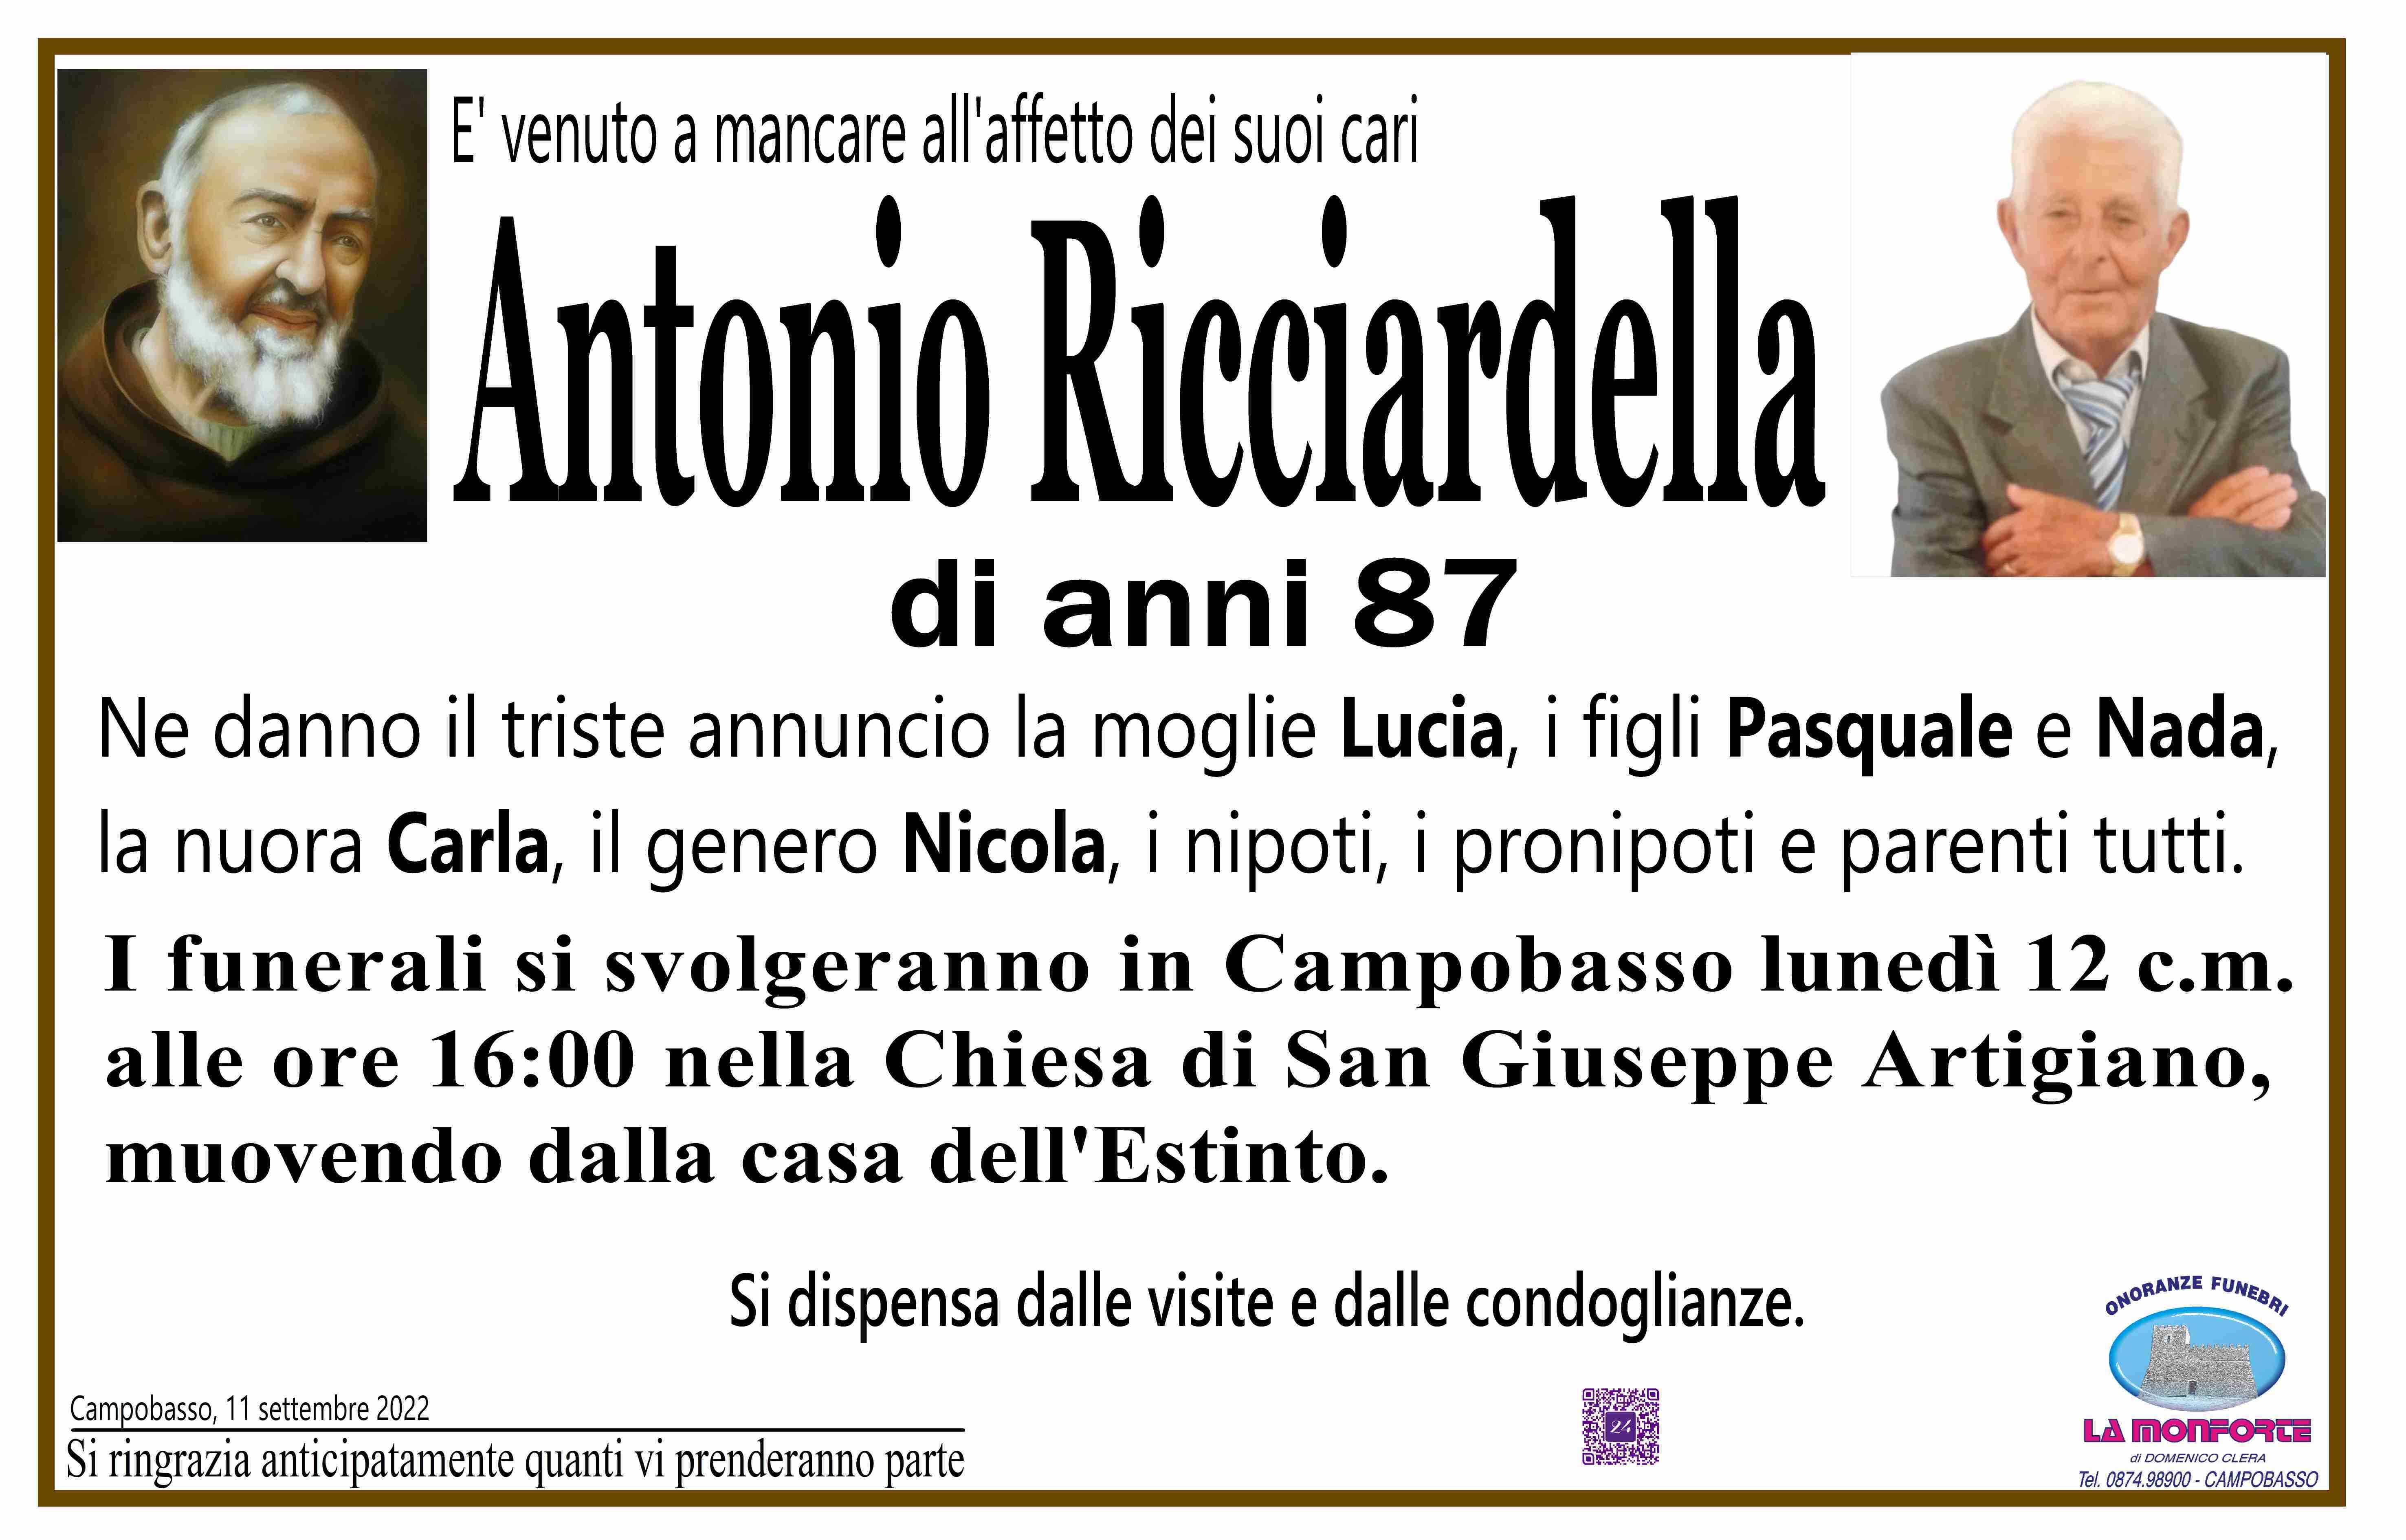 Antonio Ricciardella